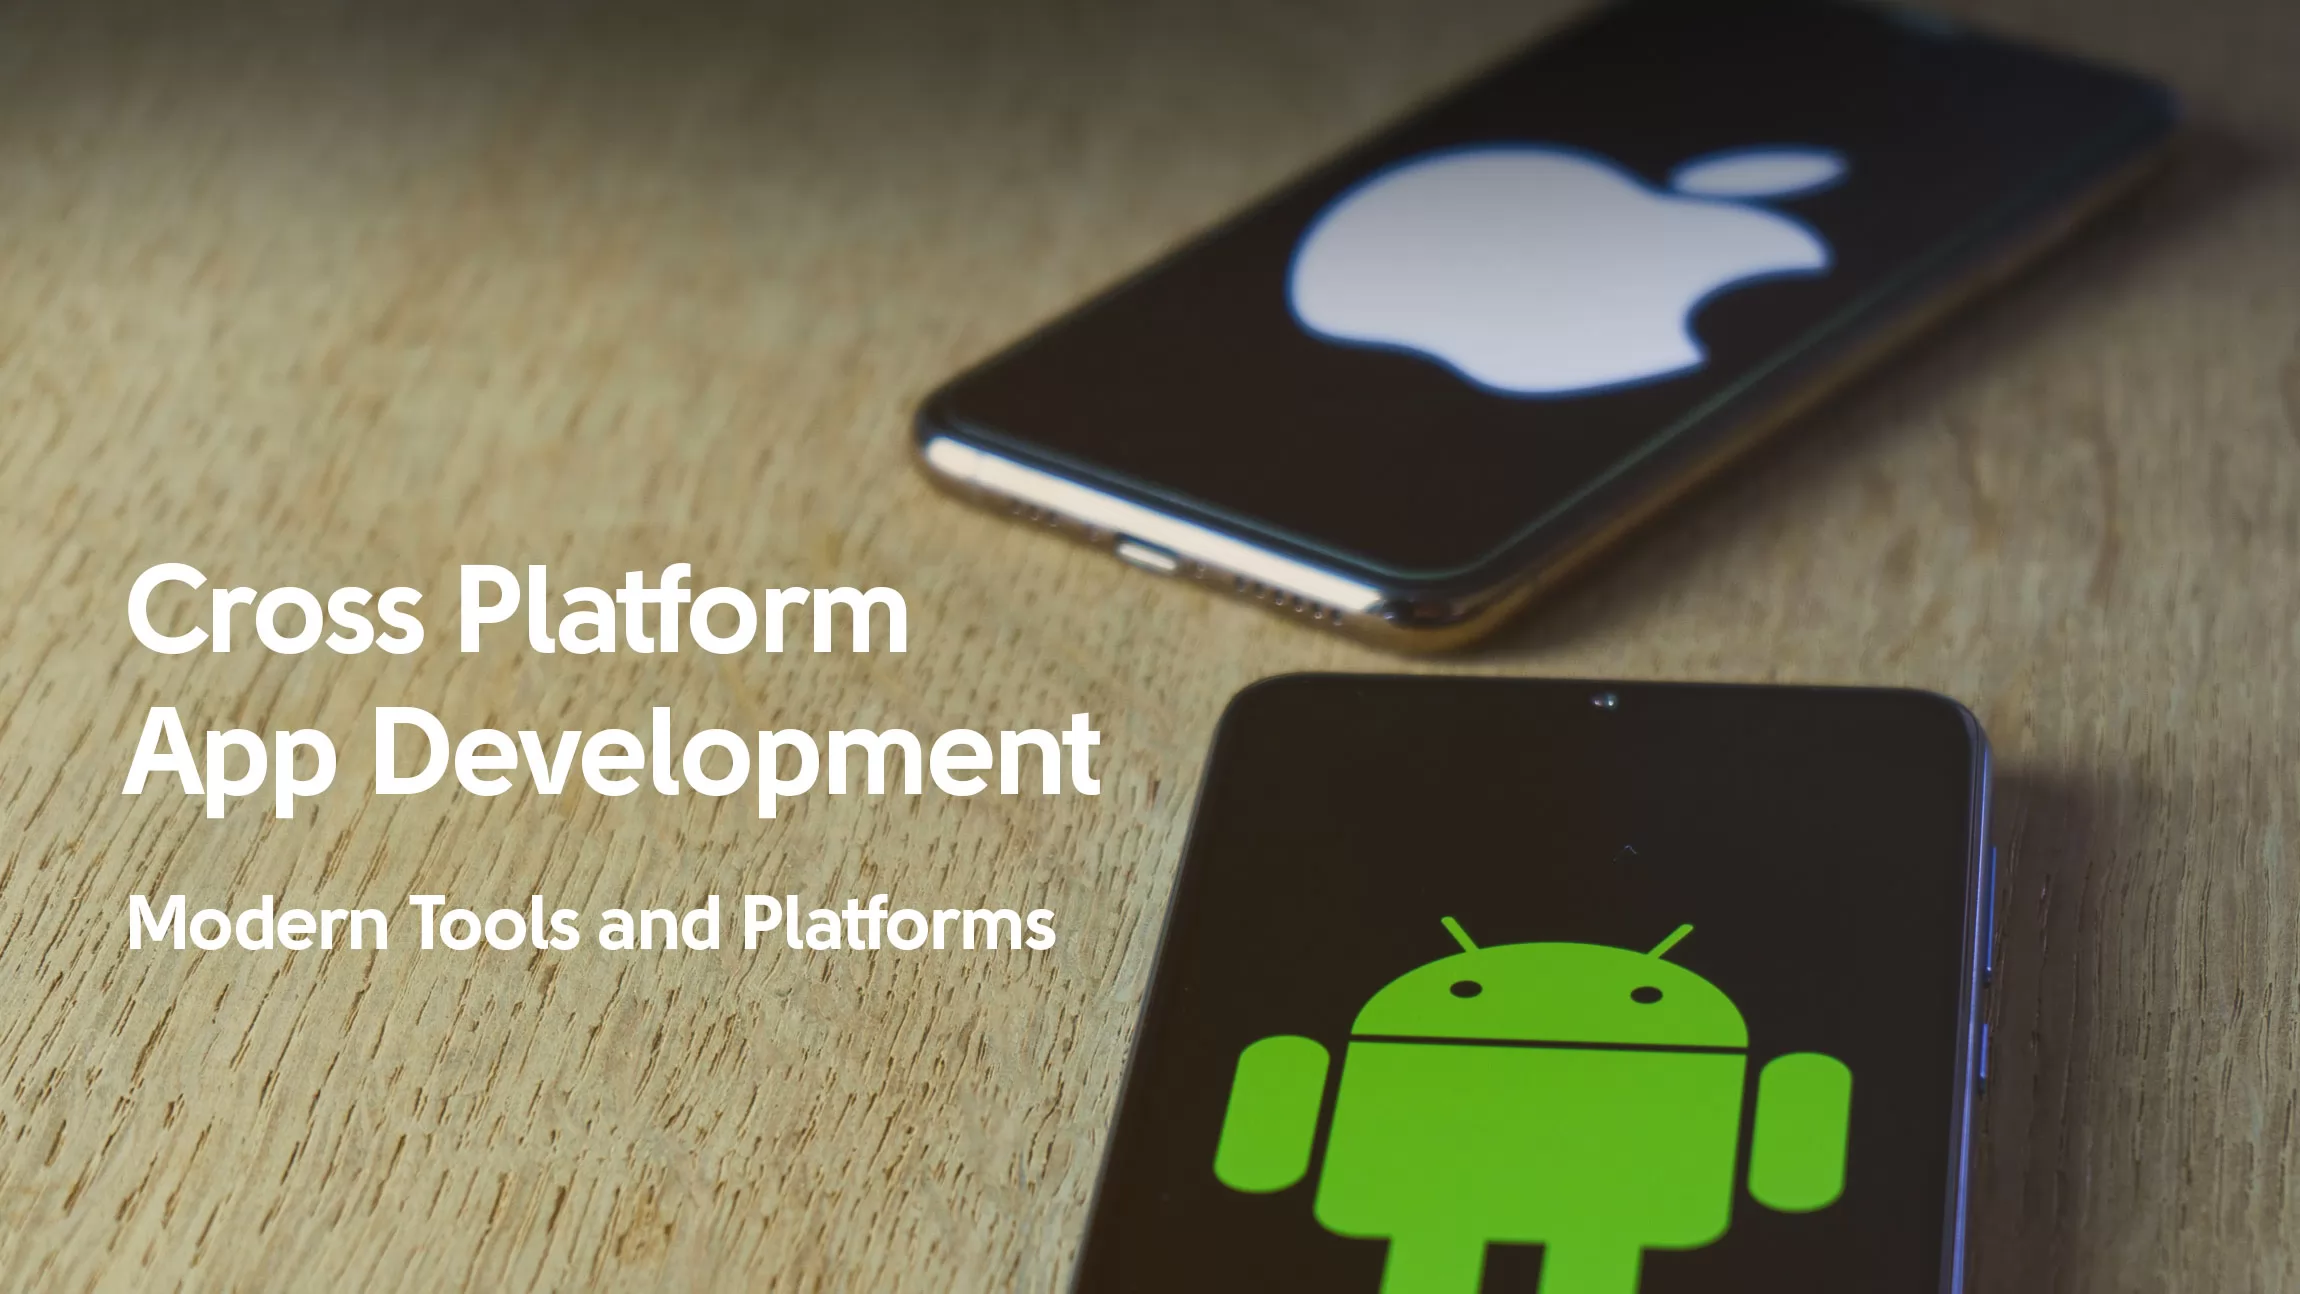 Cross Platform App Development: Modern Tools and Platforms